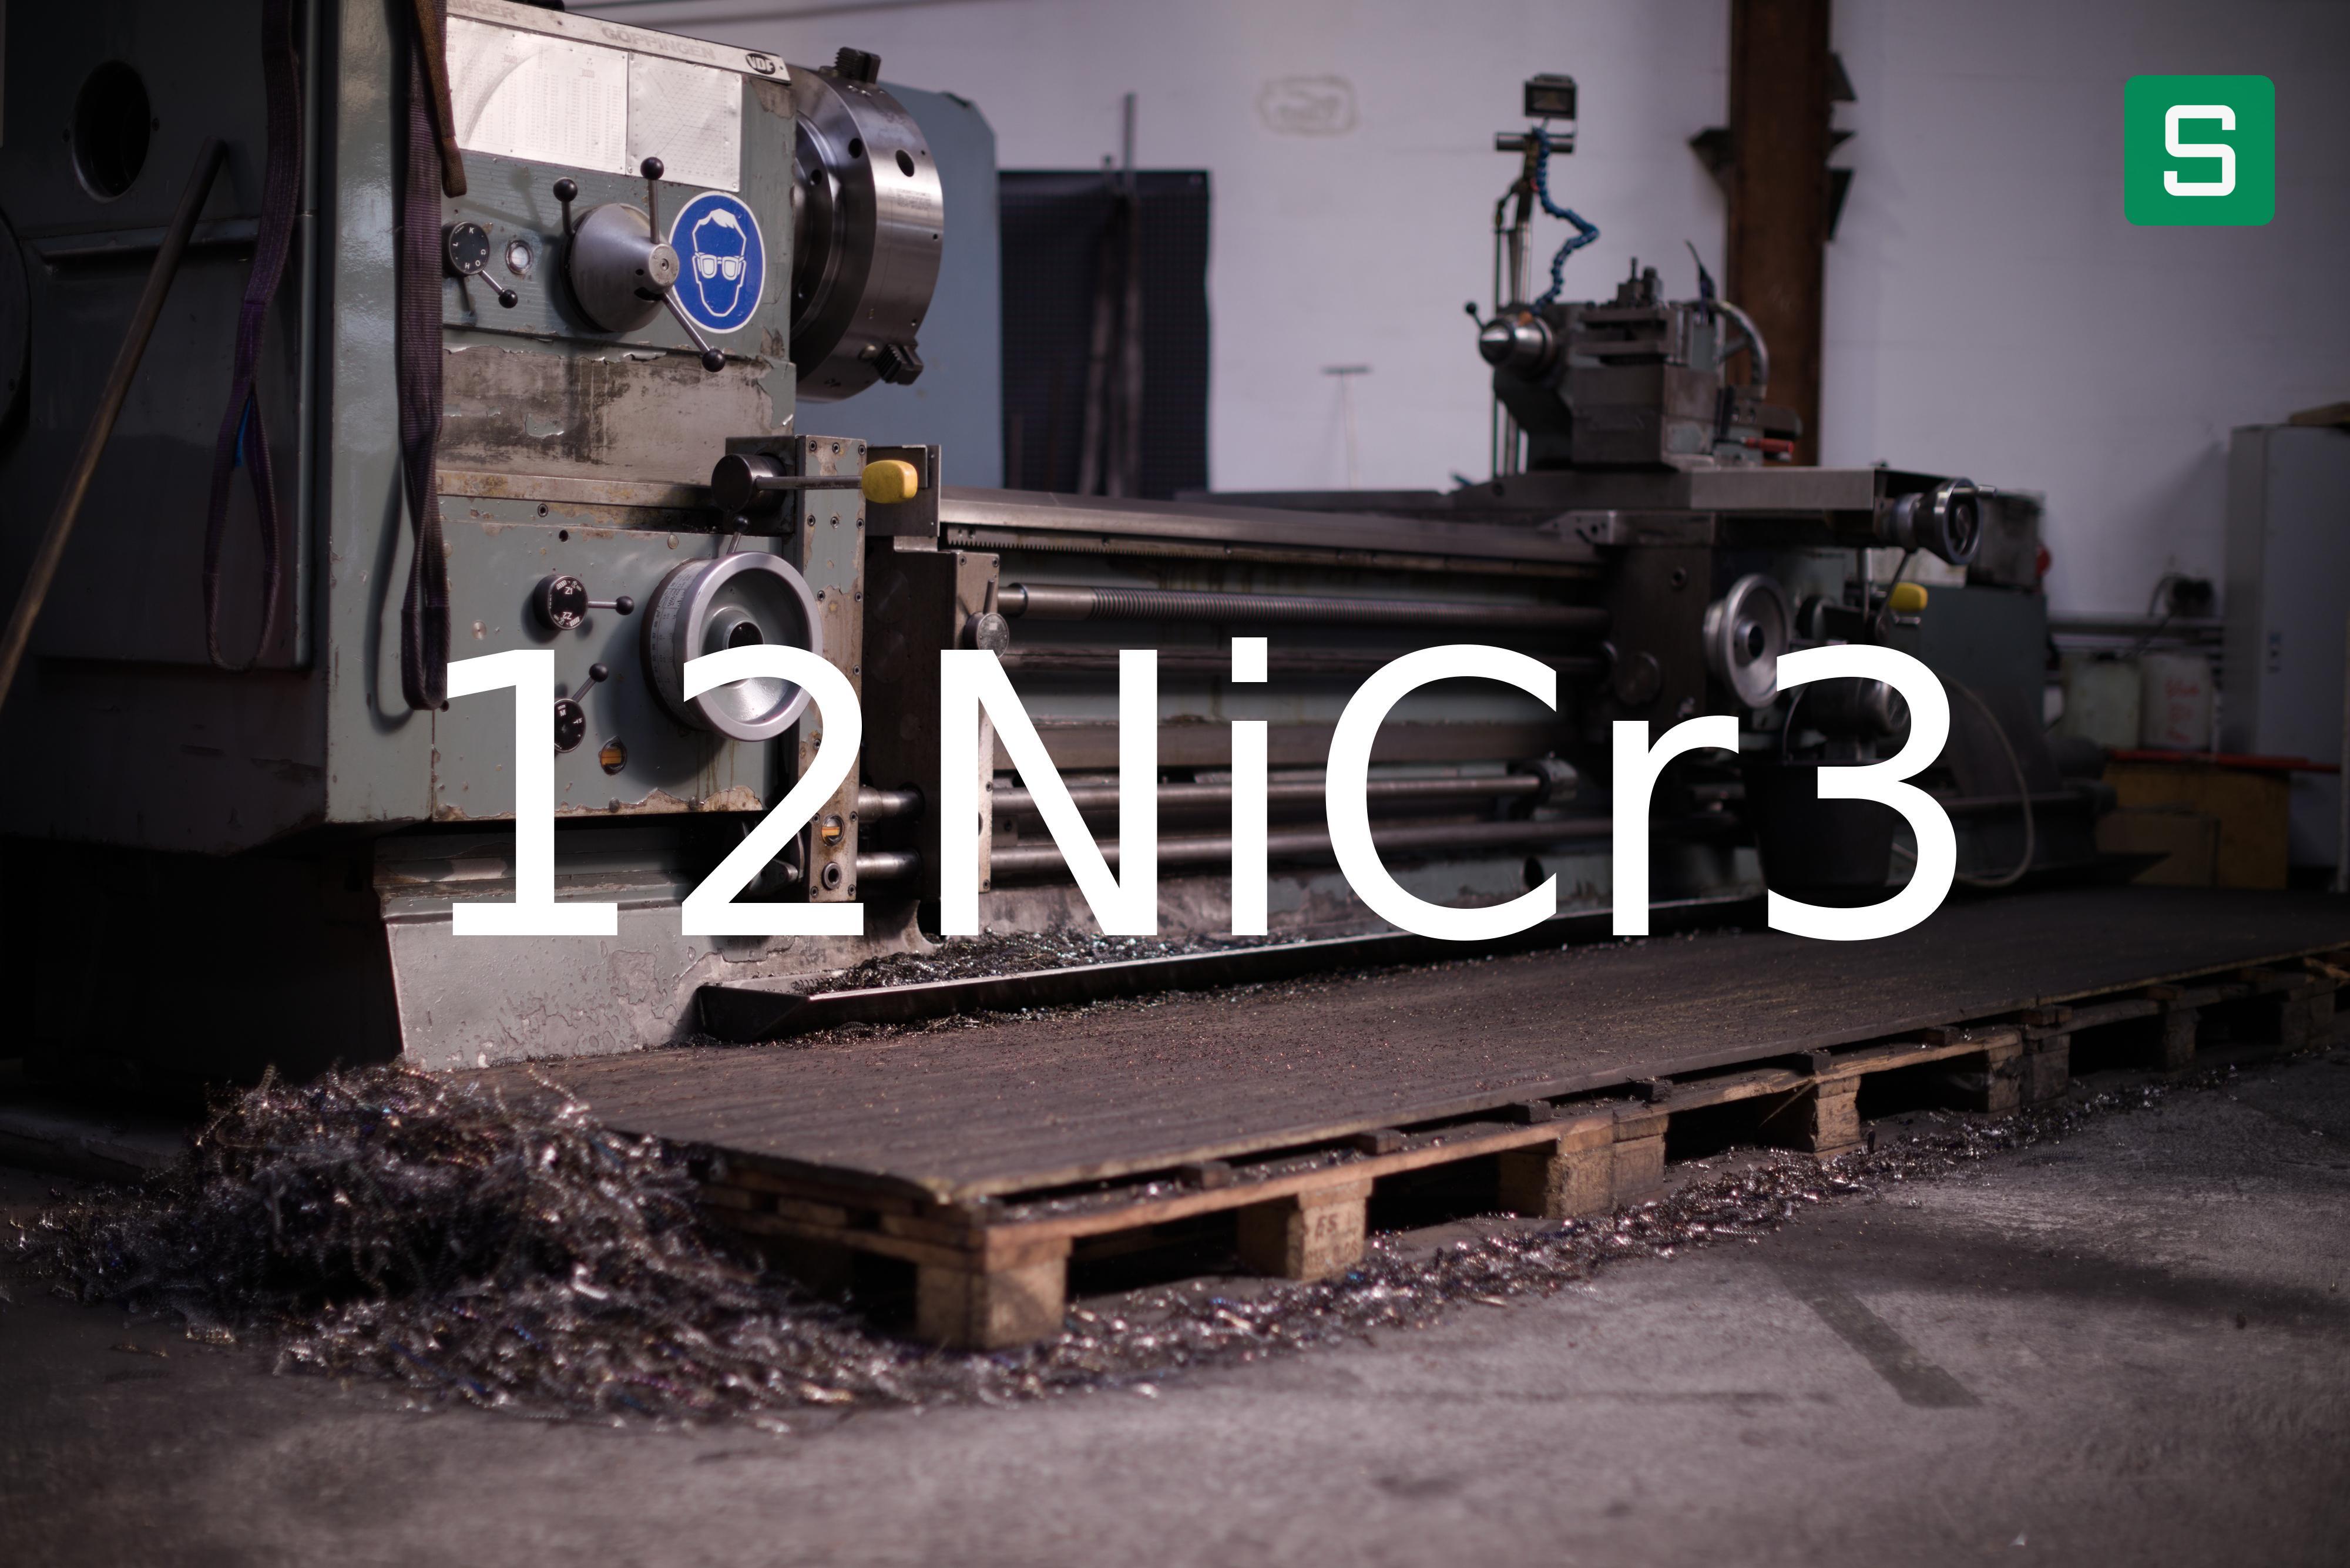 Steel Material: 12NiCr3